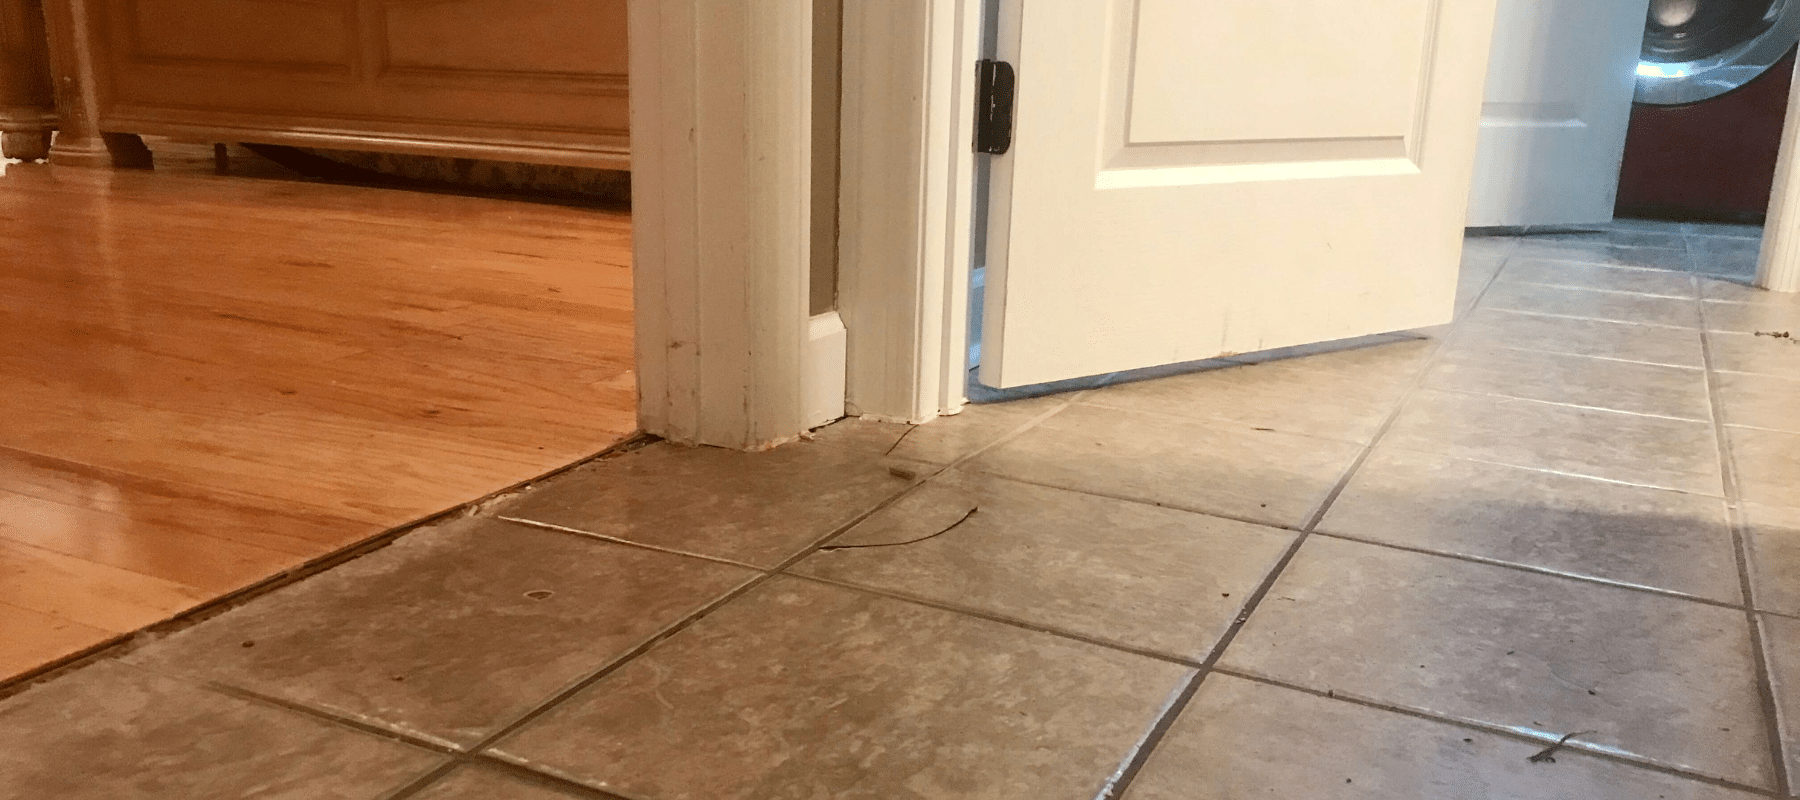 cracked tile on home's hallway